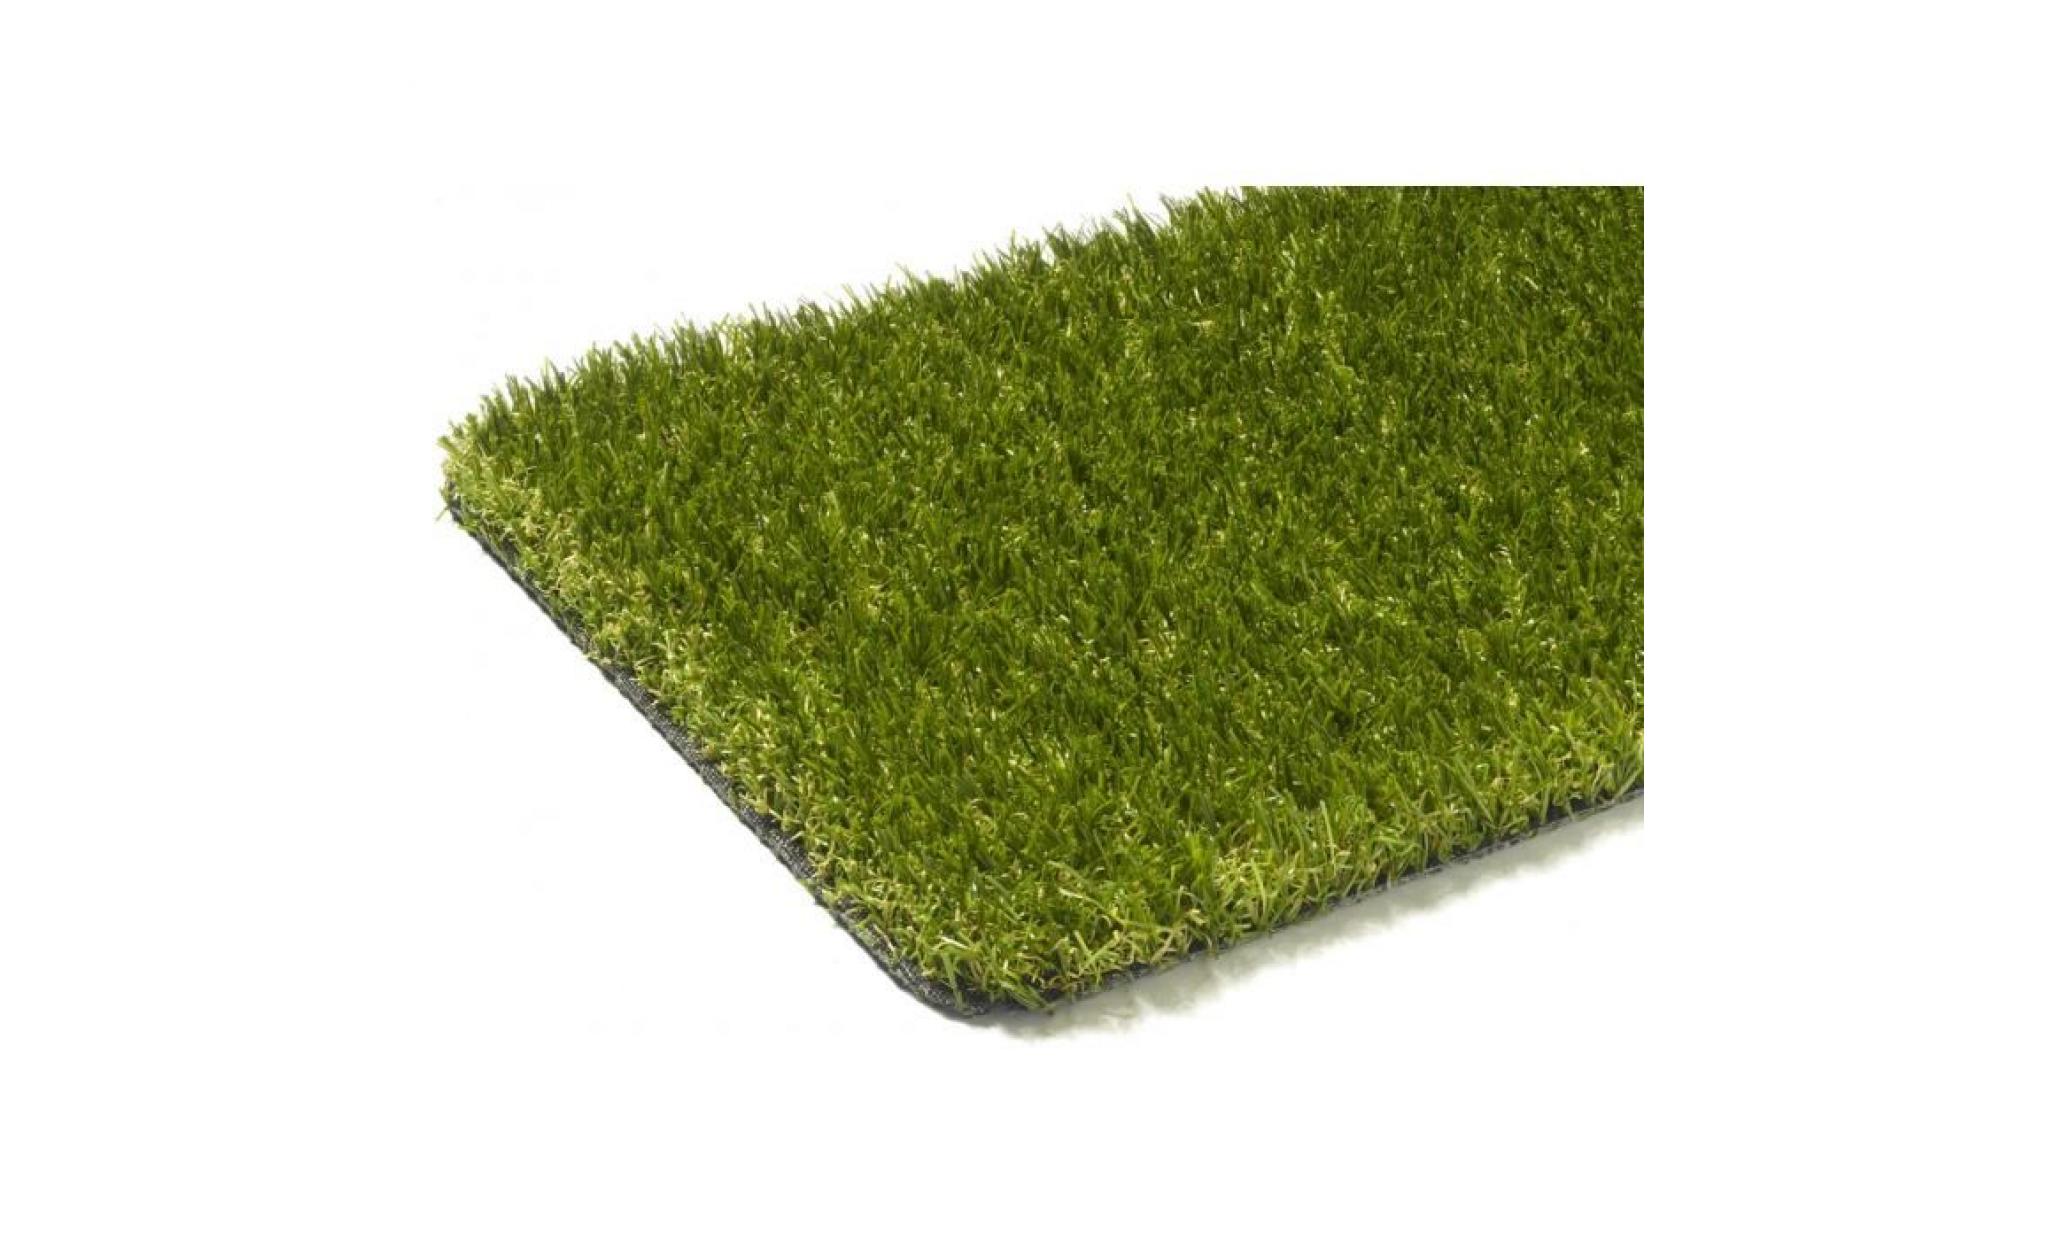 chelsea   tapis type luxe gazon artificiel – pour jardin, terrasse, balcon   vert  [200x100 cm]